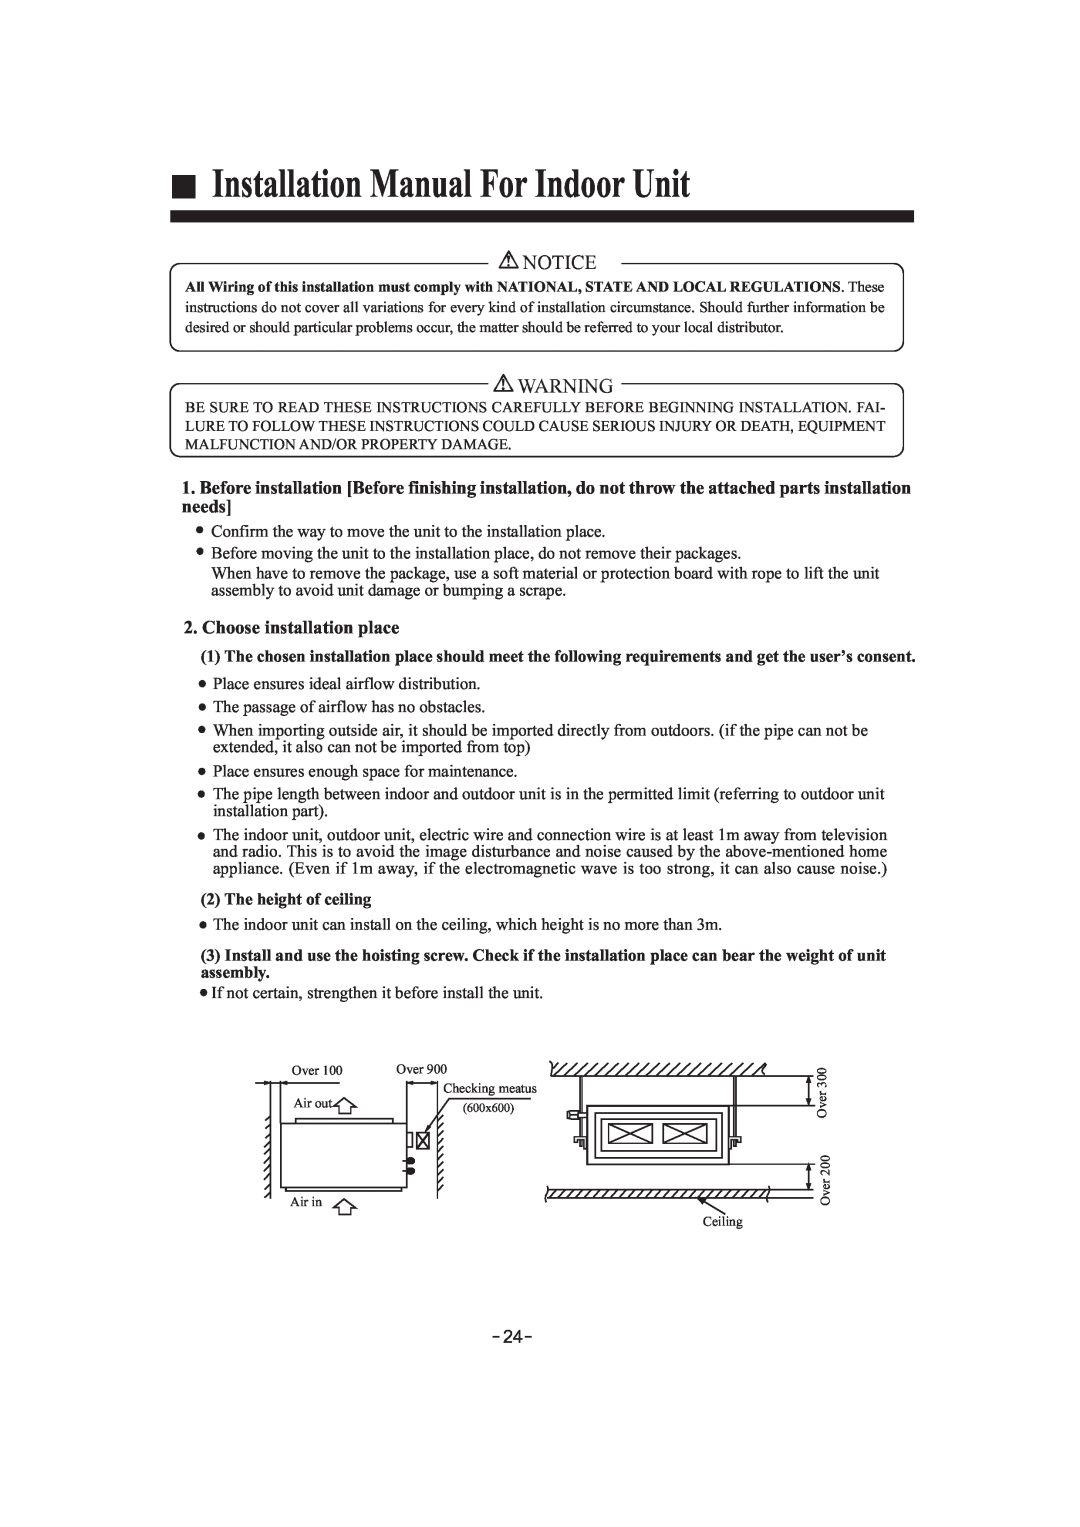 Haier HDU-42HF03/H installation manual Installation Manual For Indoor Unit, Choose installation place 